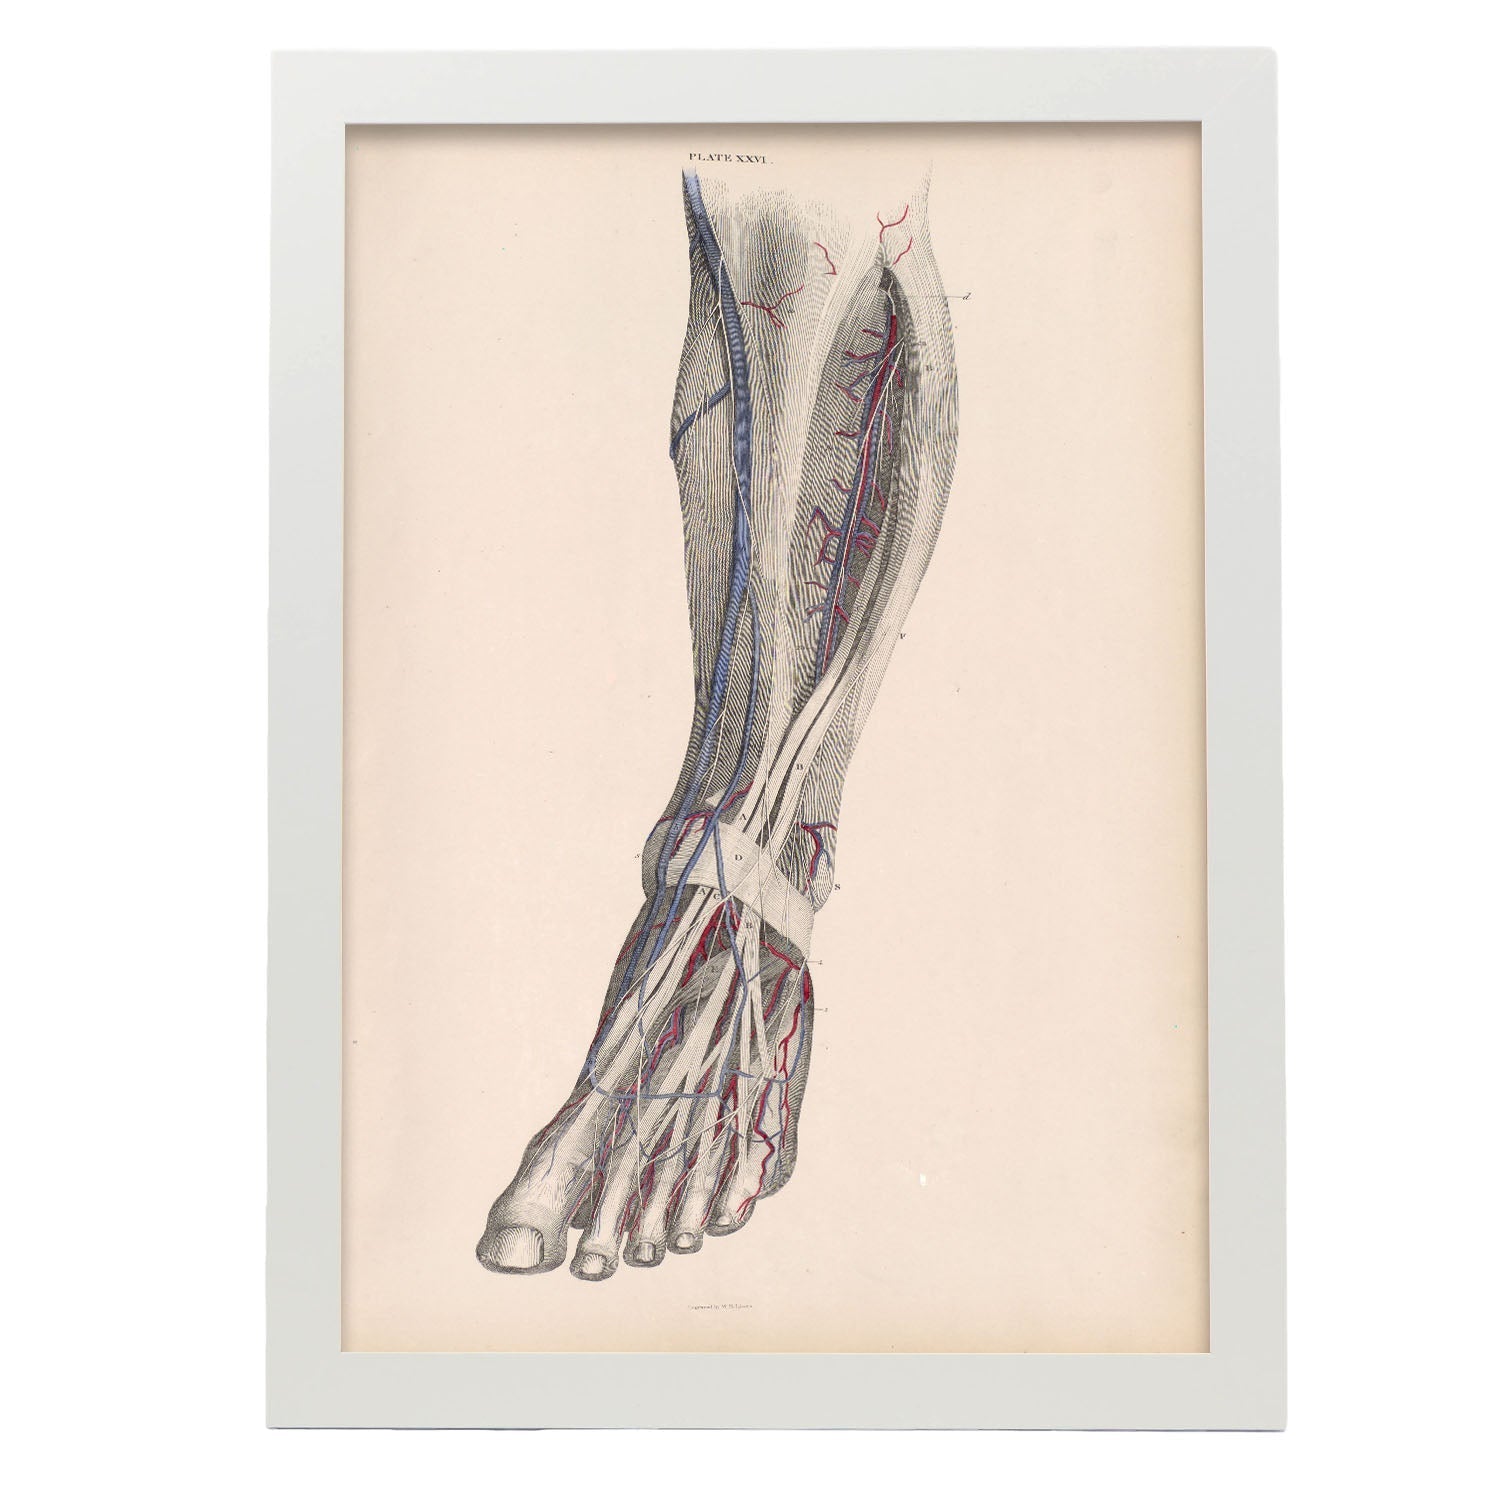 Dissection of the lower leg-Artwork-Nacnic-A3-Marco Blanco-Nacnic Estudio SL